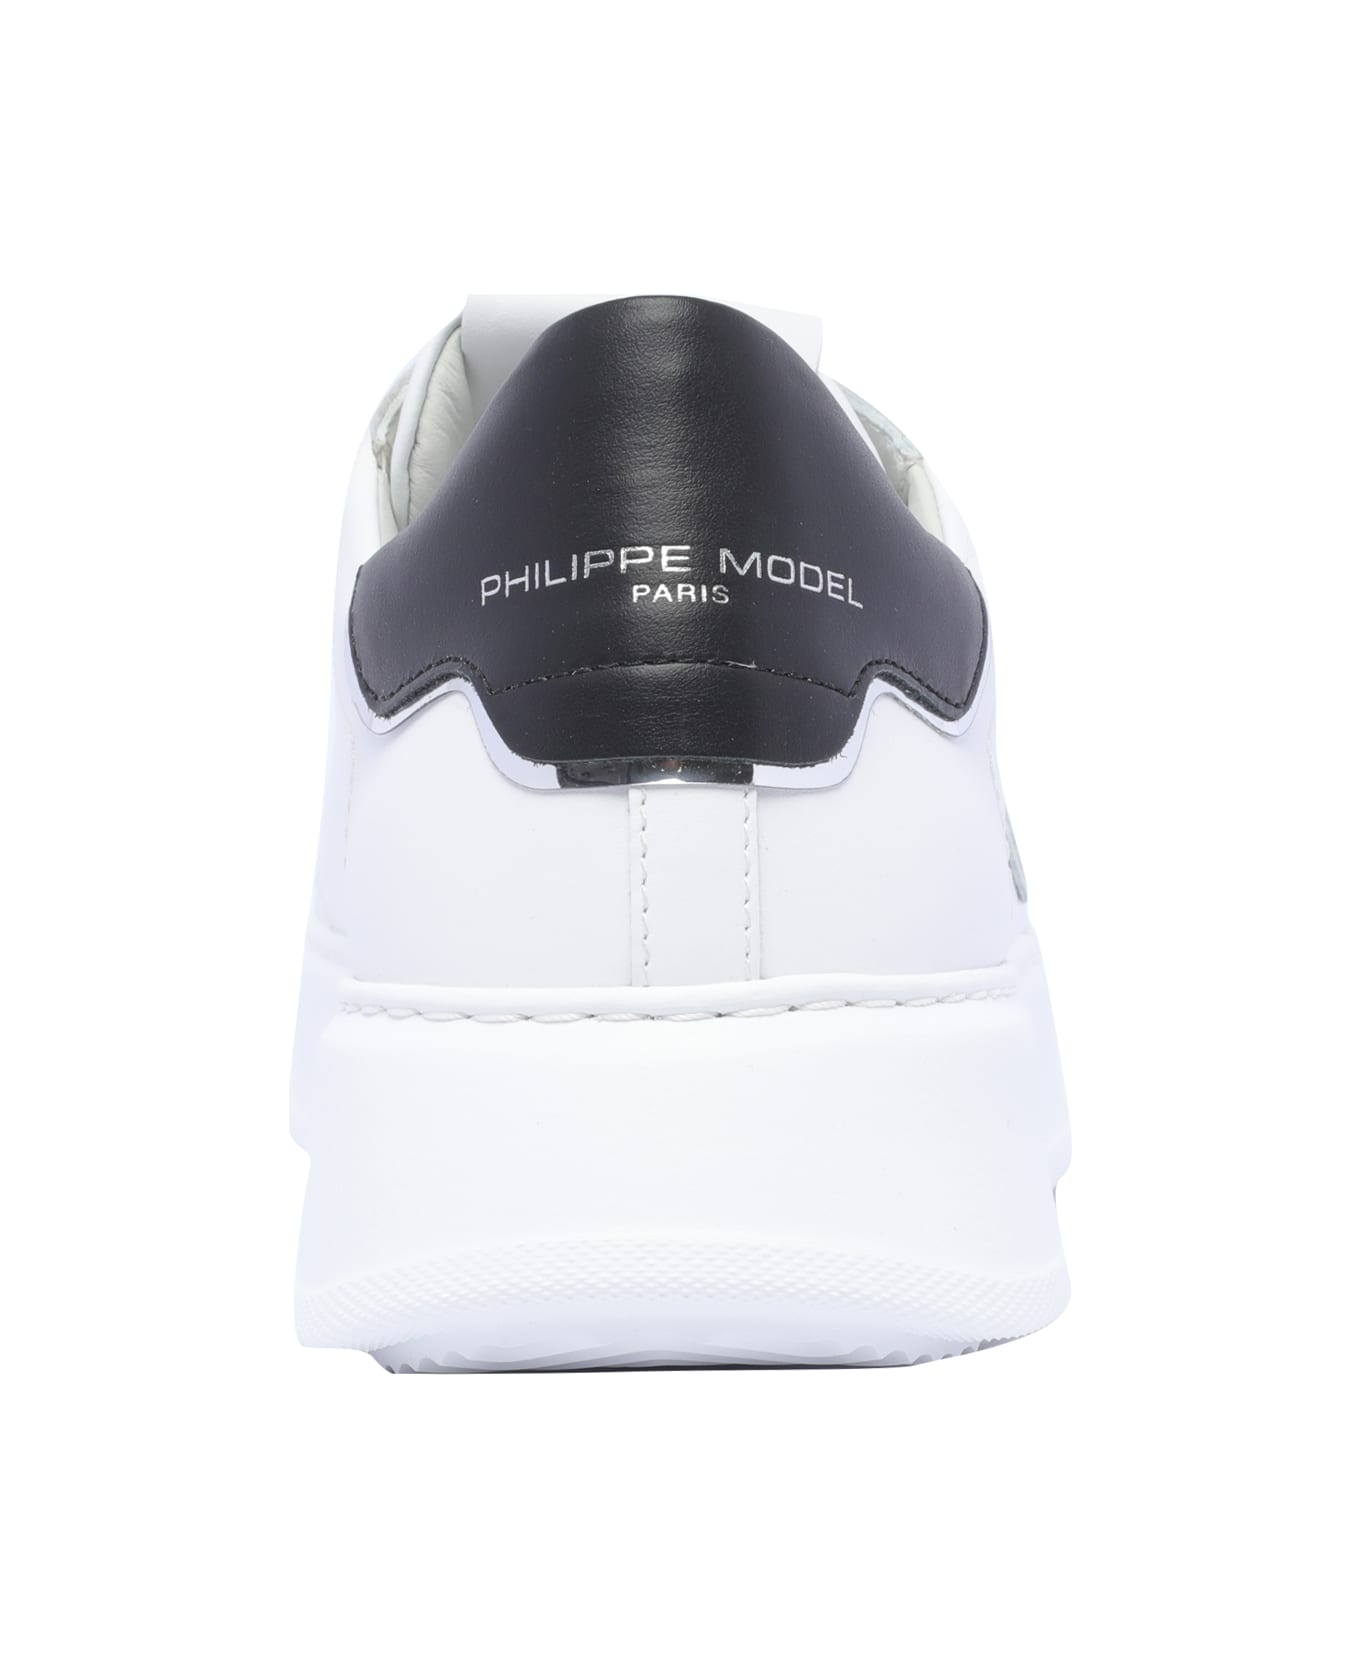 Philippe Model Temple Sneakers - White, black スニーカー